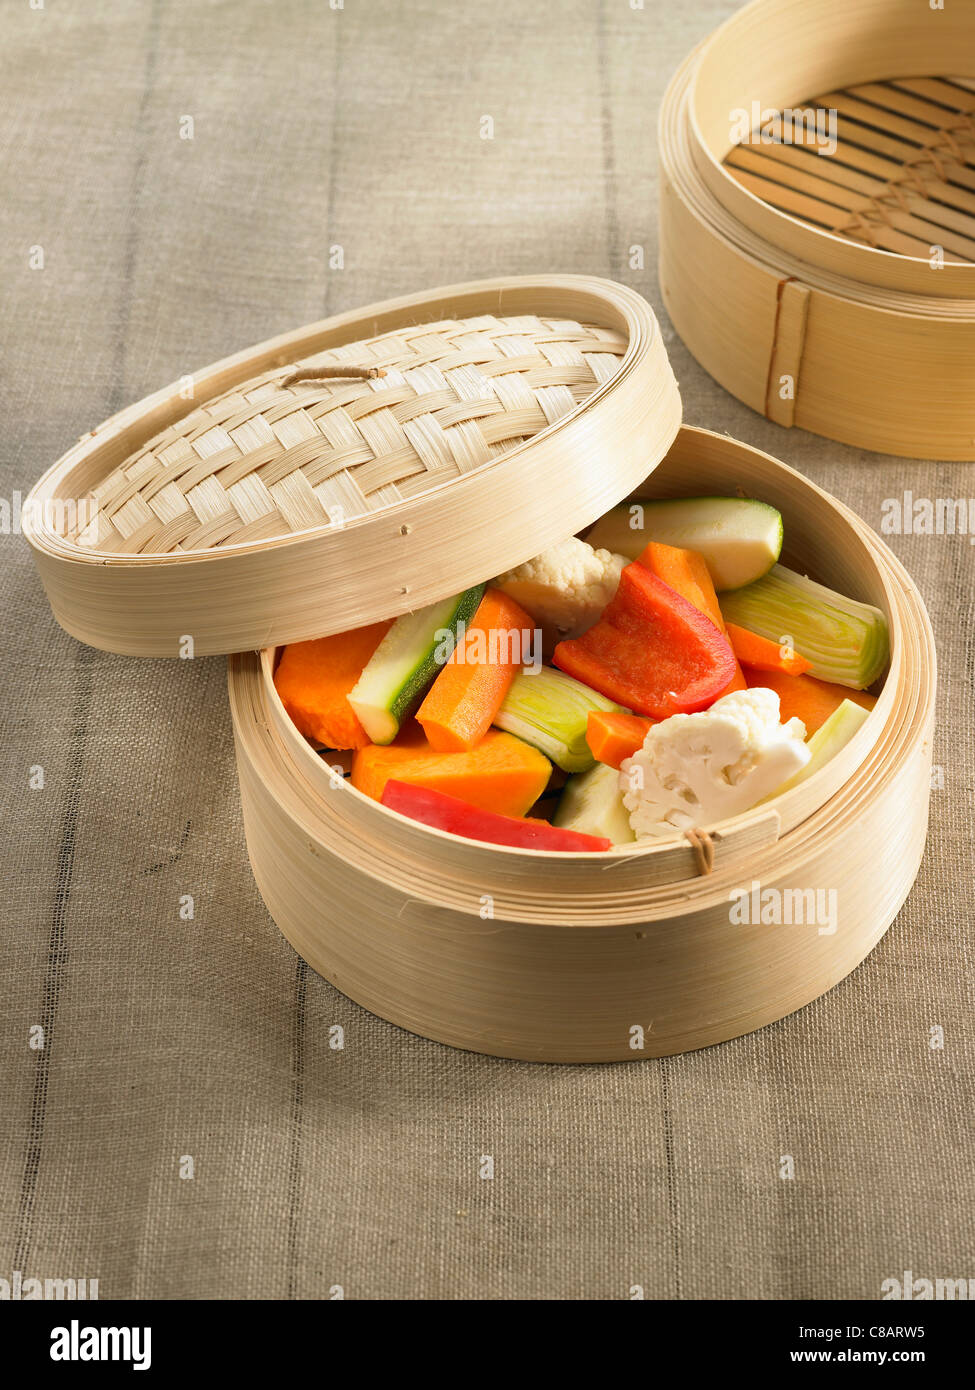 https://c8.alamy.com/comp/C8ARW5/raw-vegetables-in-a-bamboo-steam-basket-C8ARW5.jpg